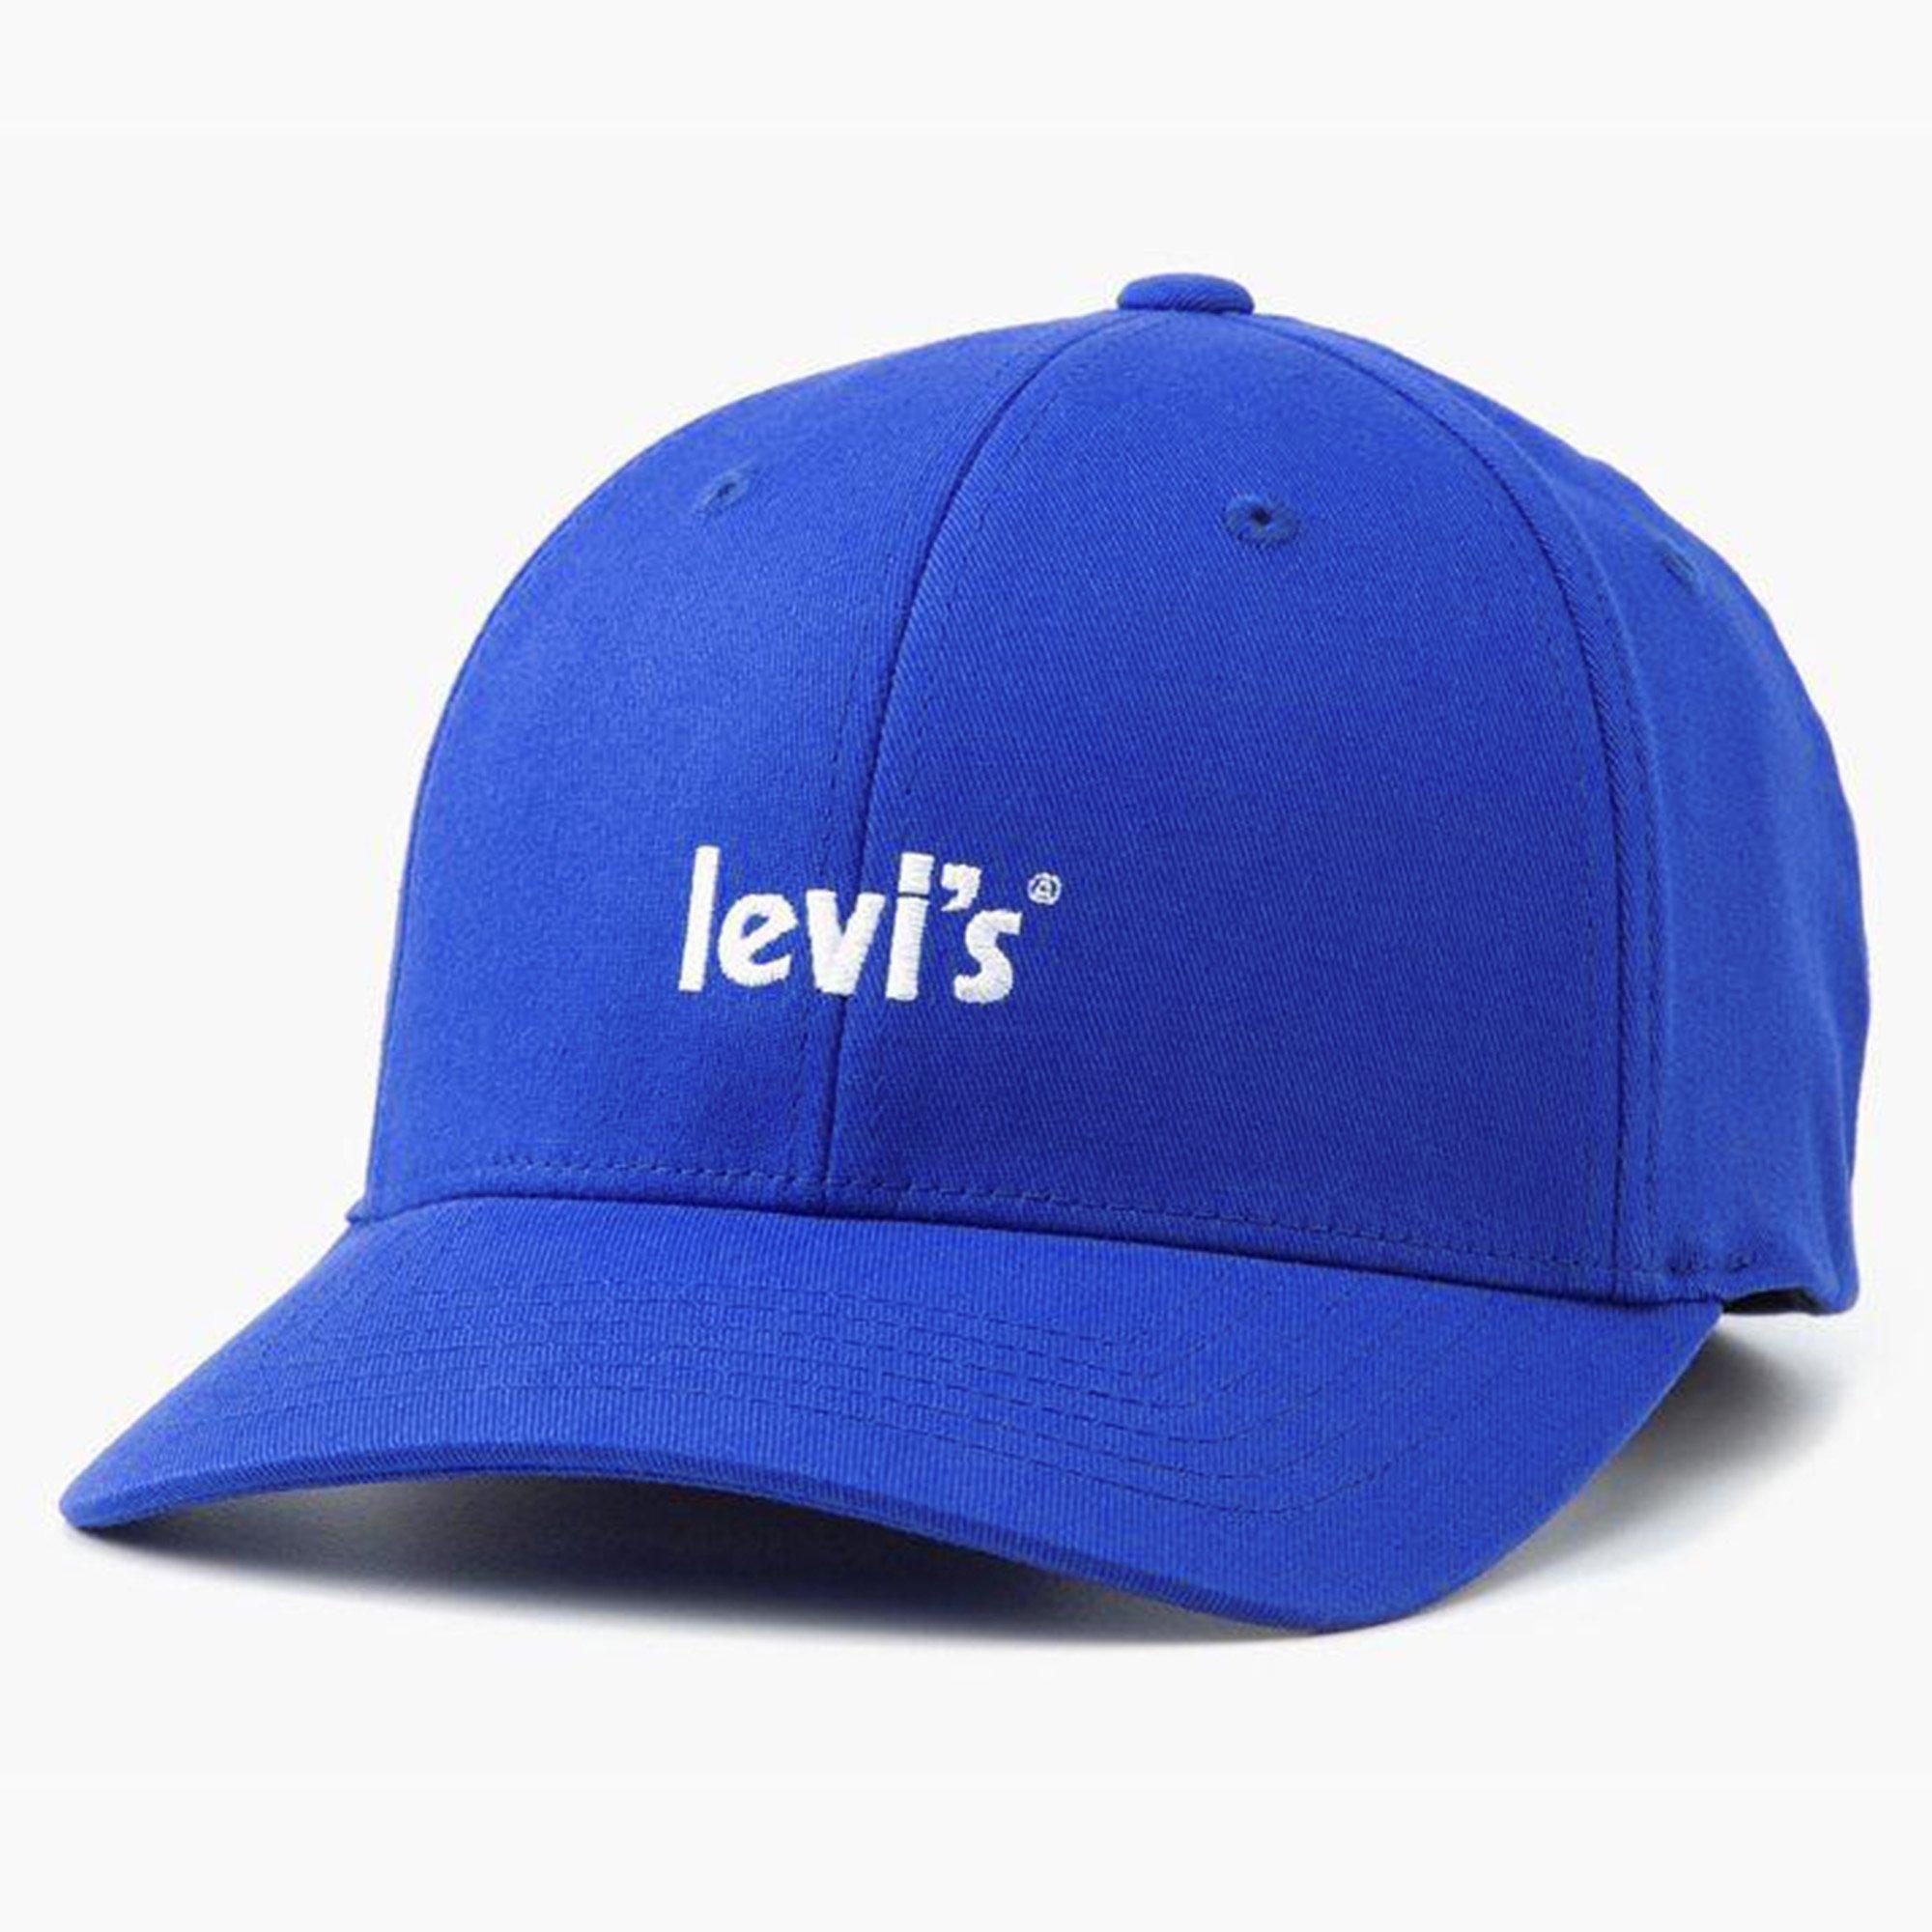 Levis Logo Flexfit Cap Baseball Caps Sports Direct My 1459